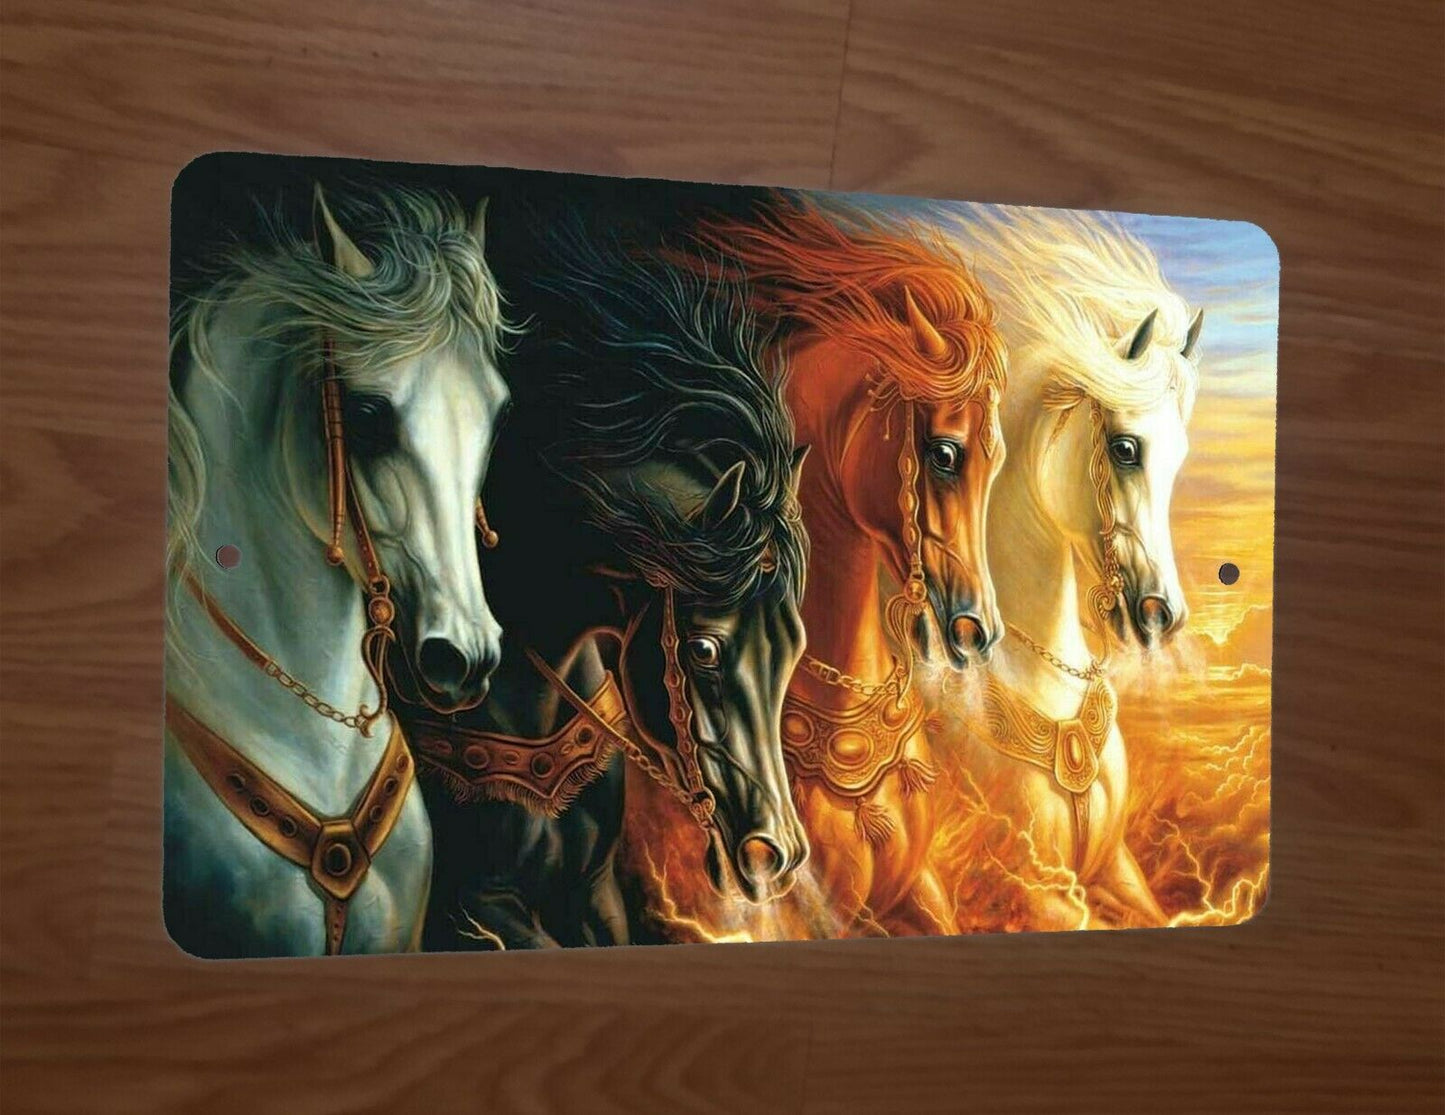 4 Horses Horsemen Apocalyptic Conquest War Famine Death 8x12 Metal Wall Sign Spiritual Animal